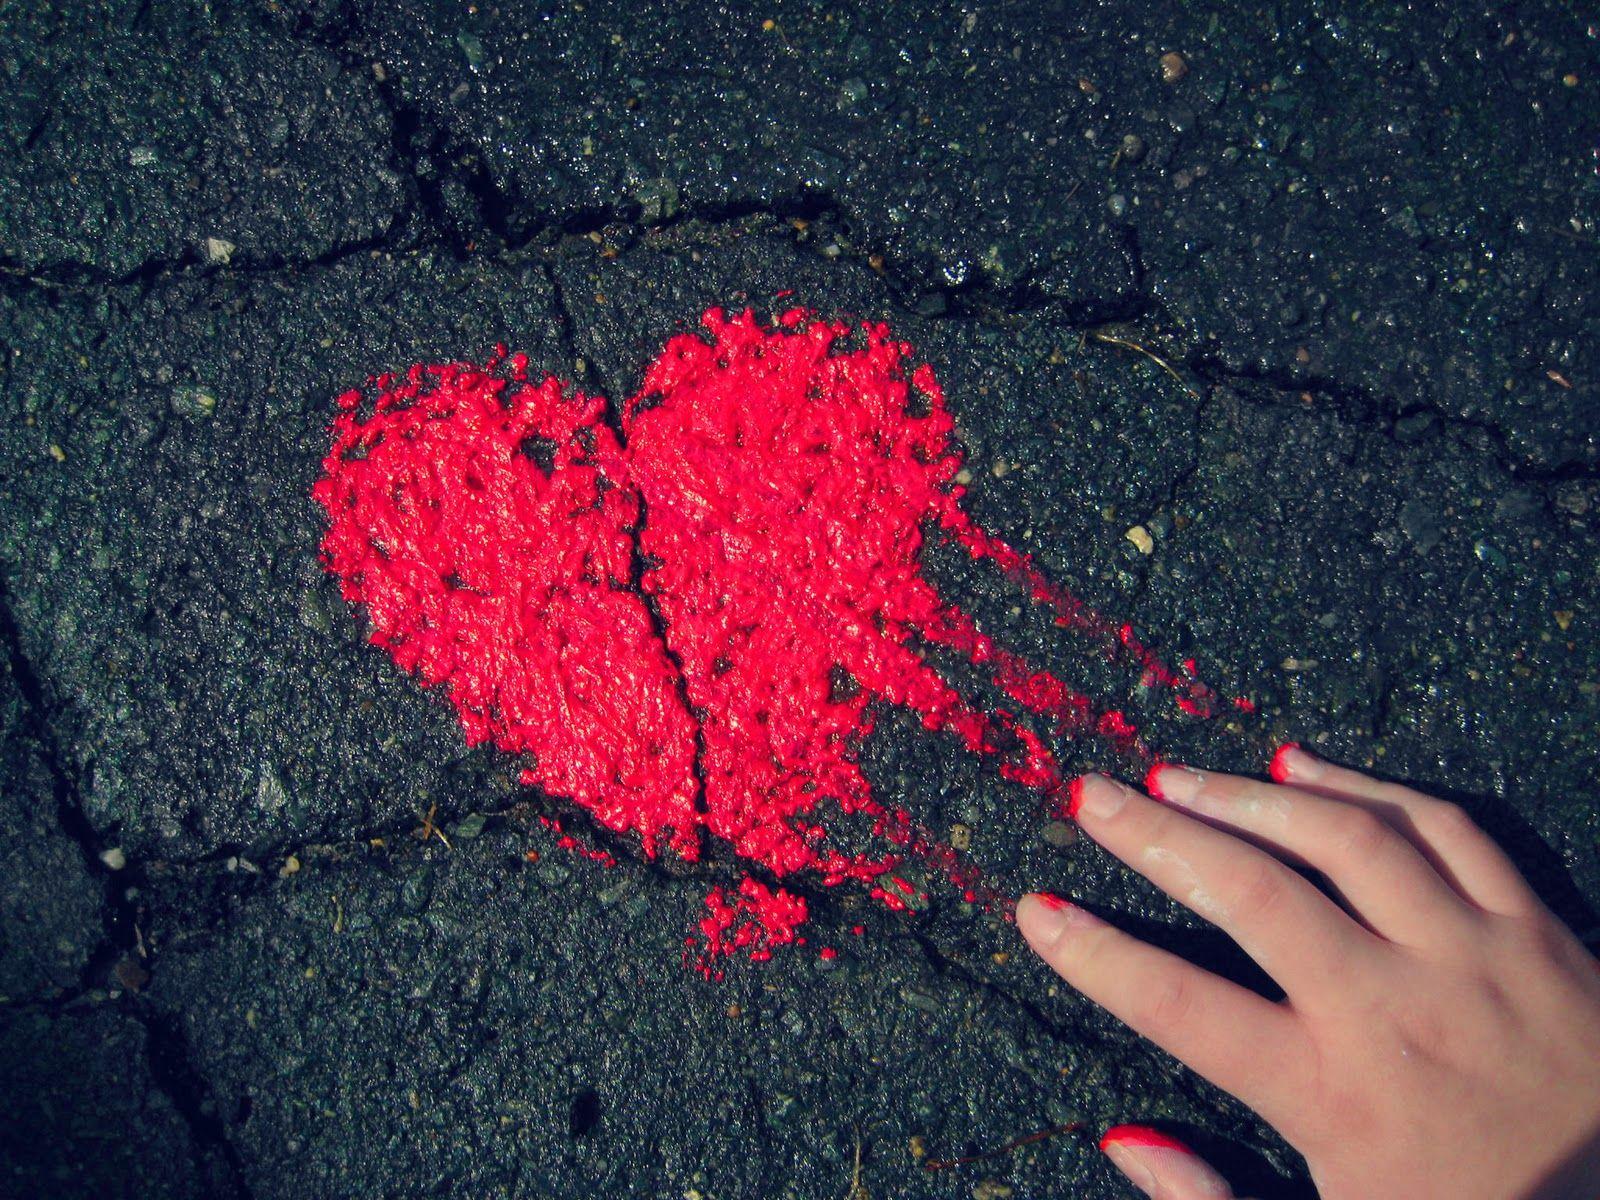 wallpaper heart broken love